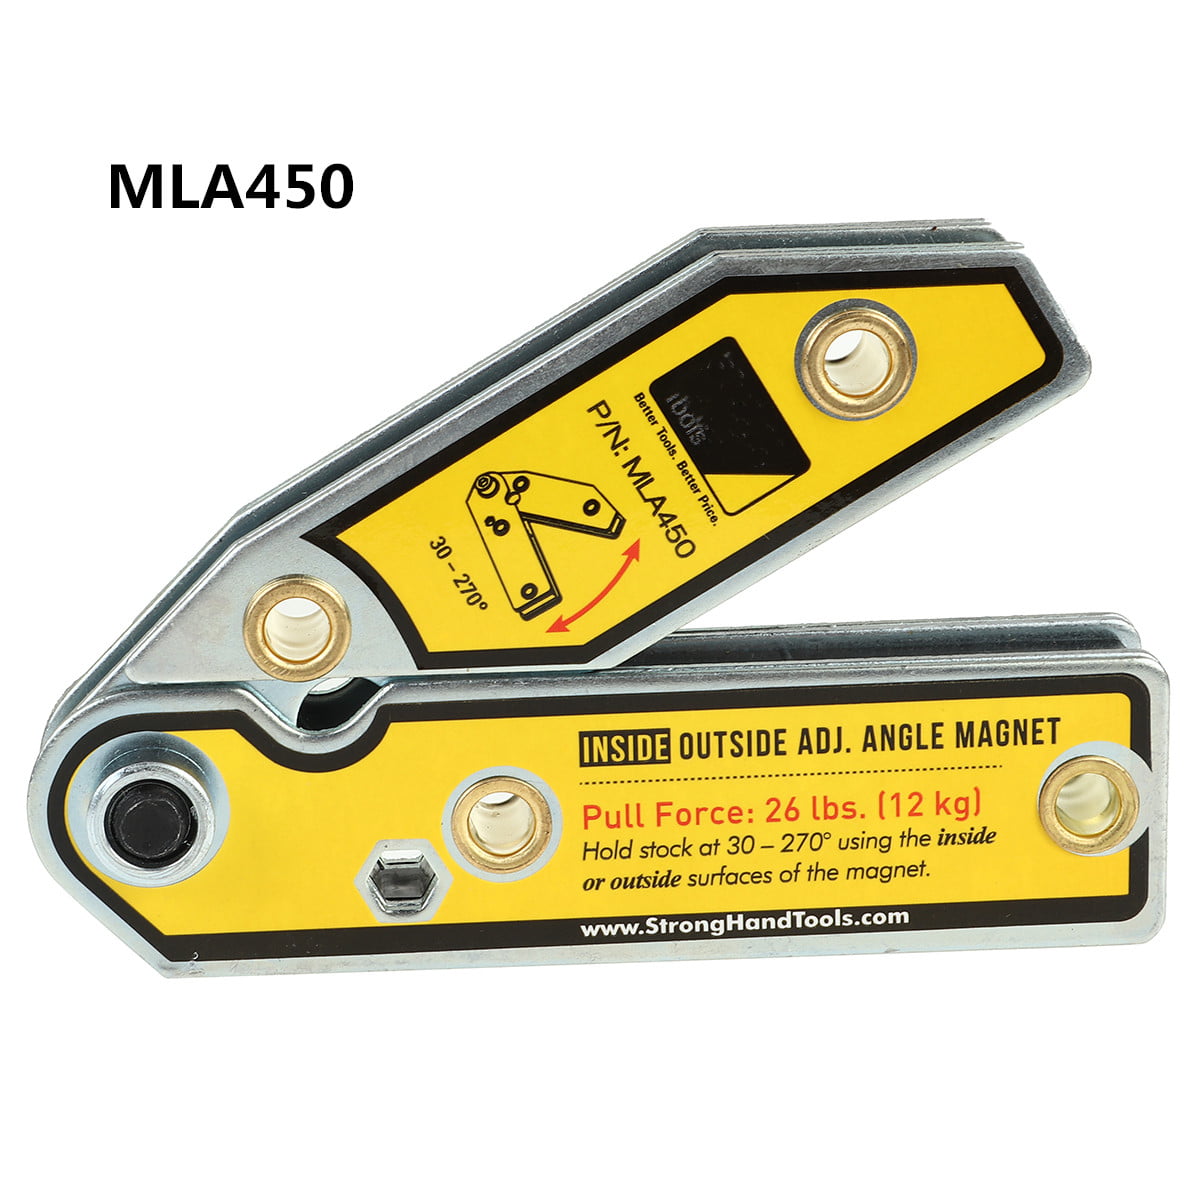 Multi Angle 30-270° Strong Hand Tools Adjustable Welding Magnet MLA450 